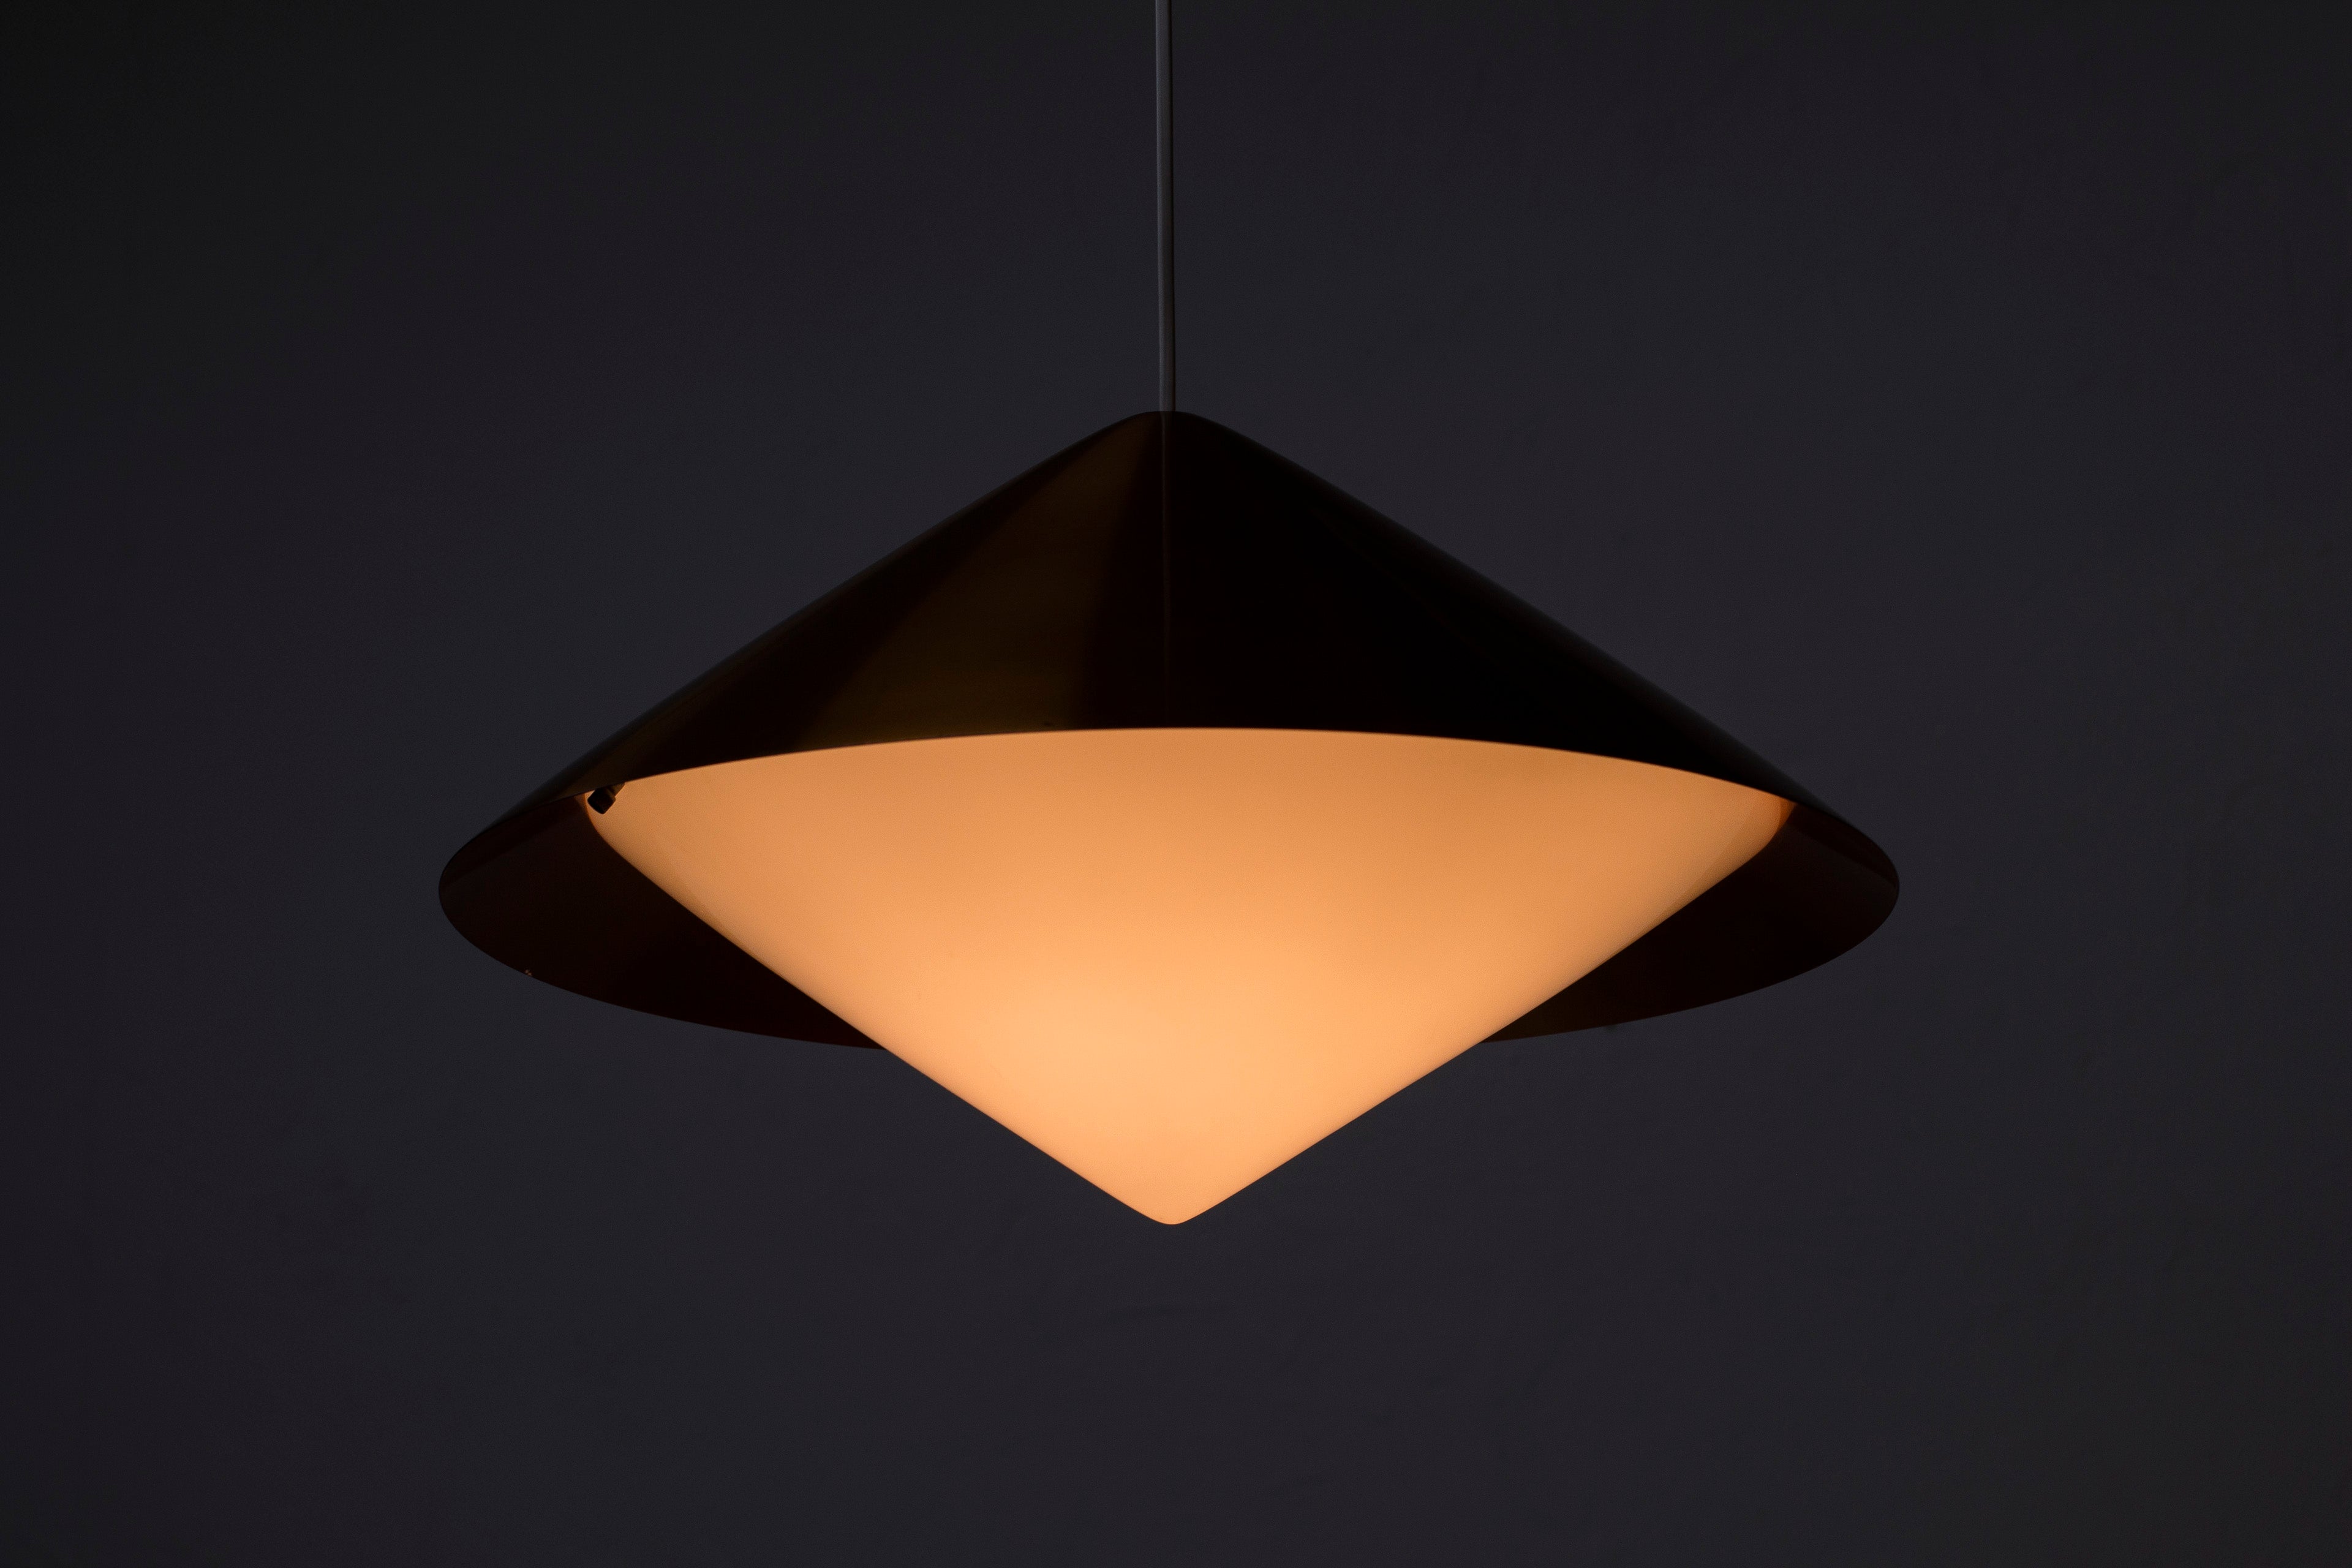 Copper ceiling lamp by Svea Winkler for Orno